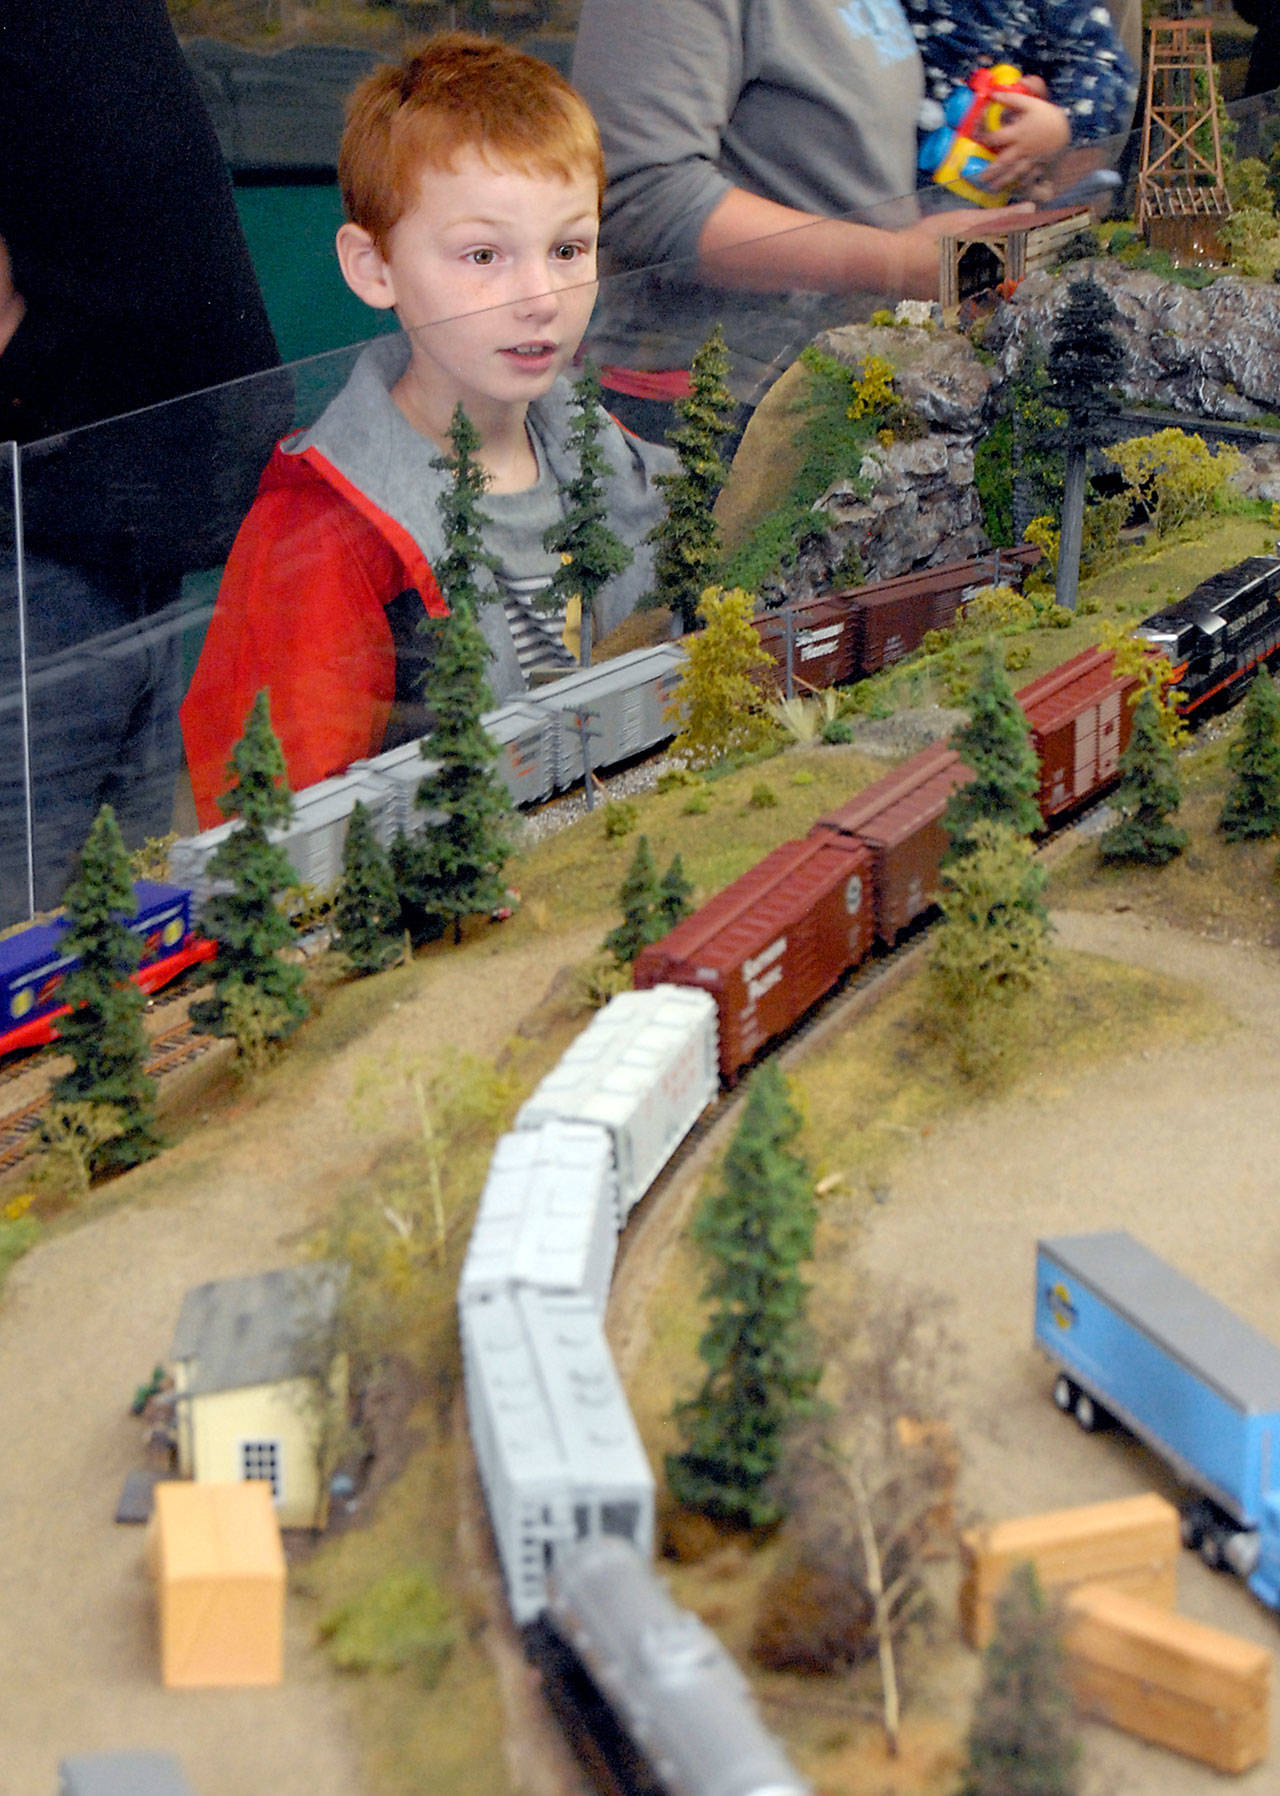 PHOTO: North Olympic Peninsula Railroaders’ train show on track for fun